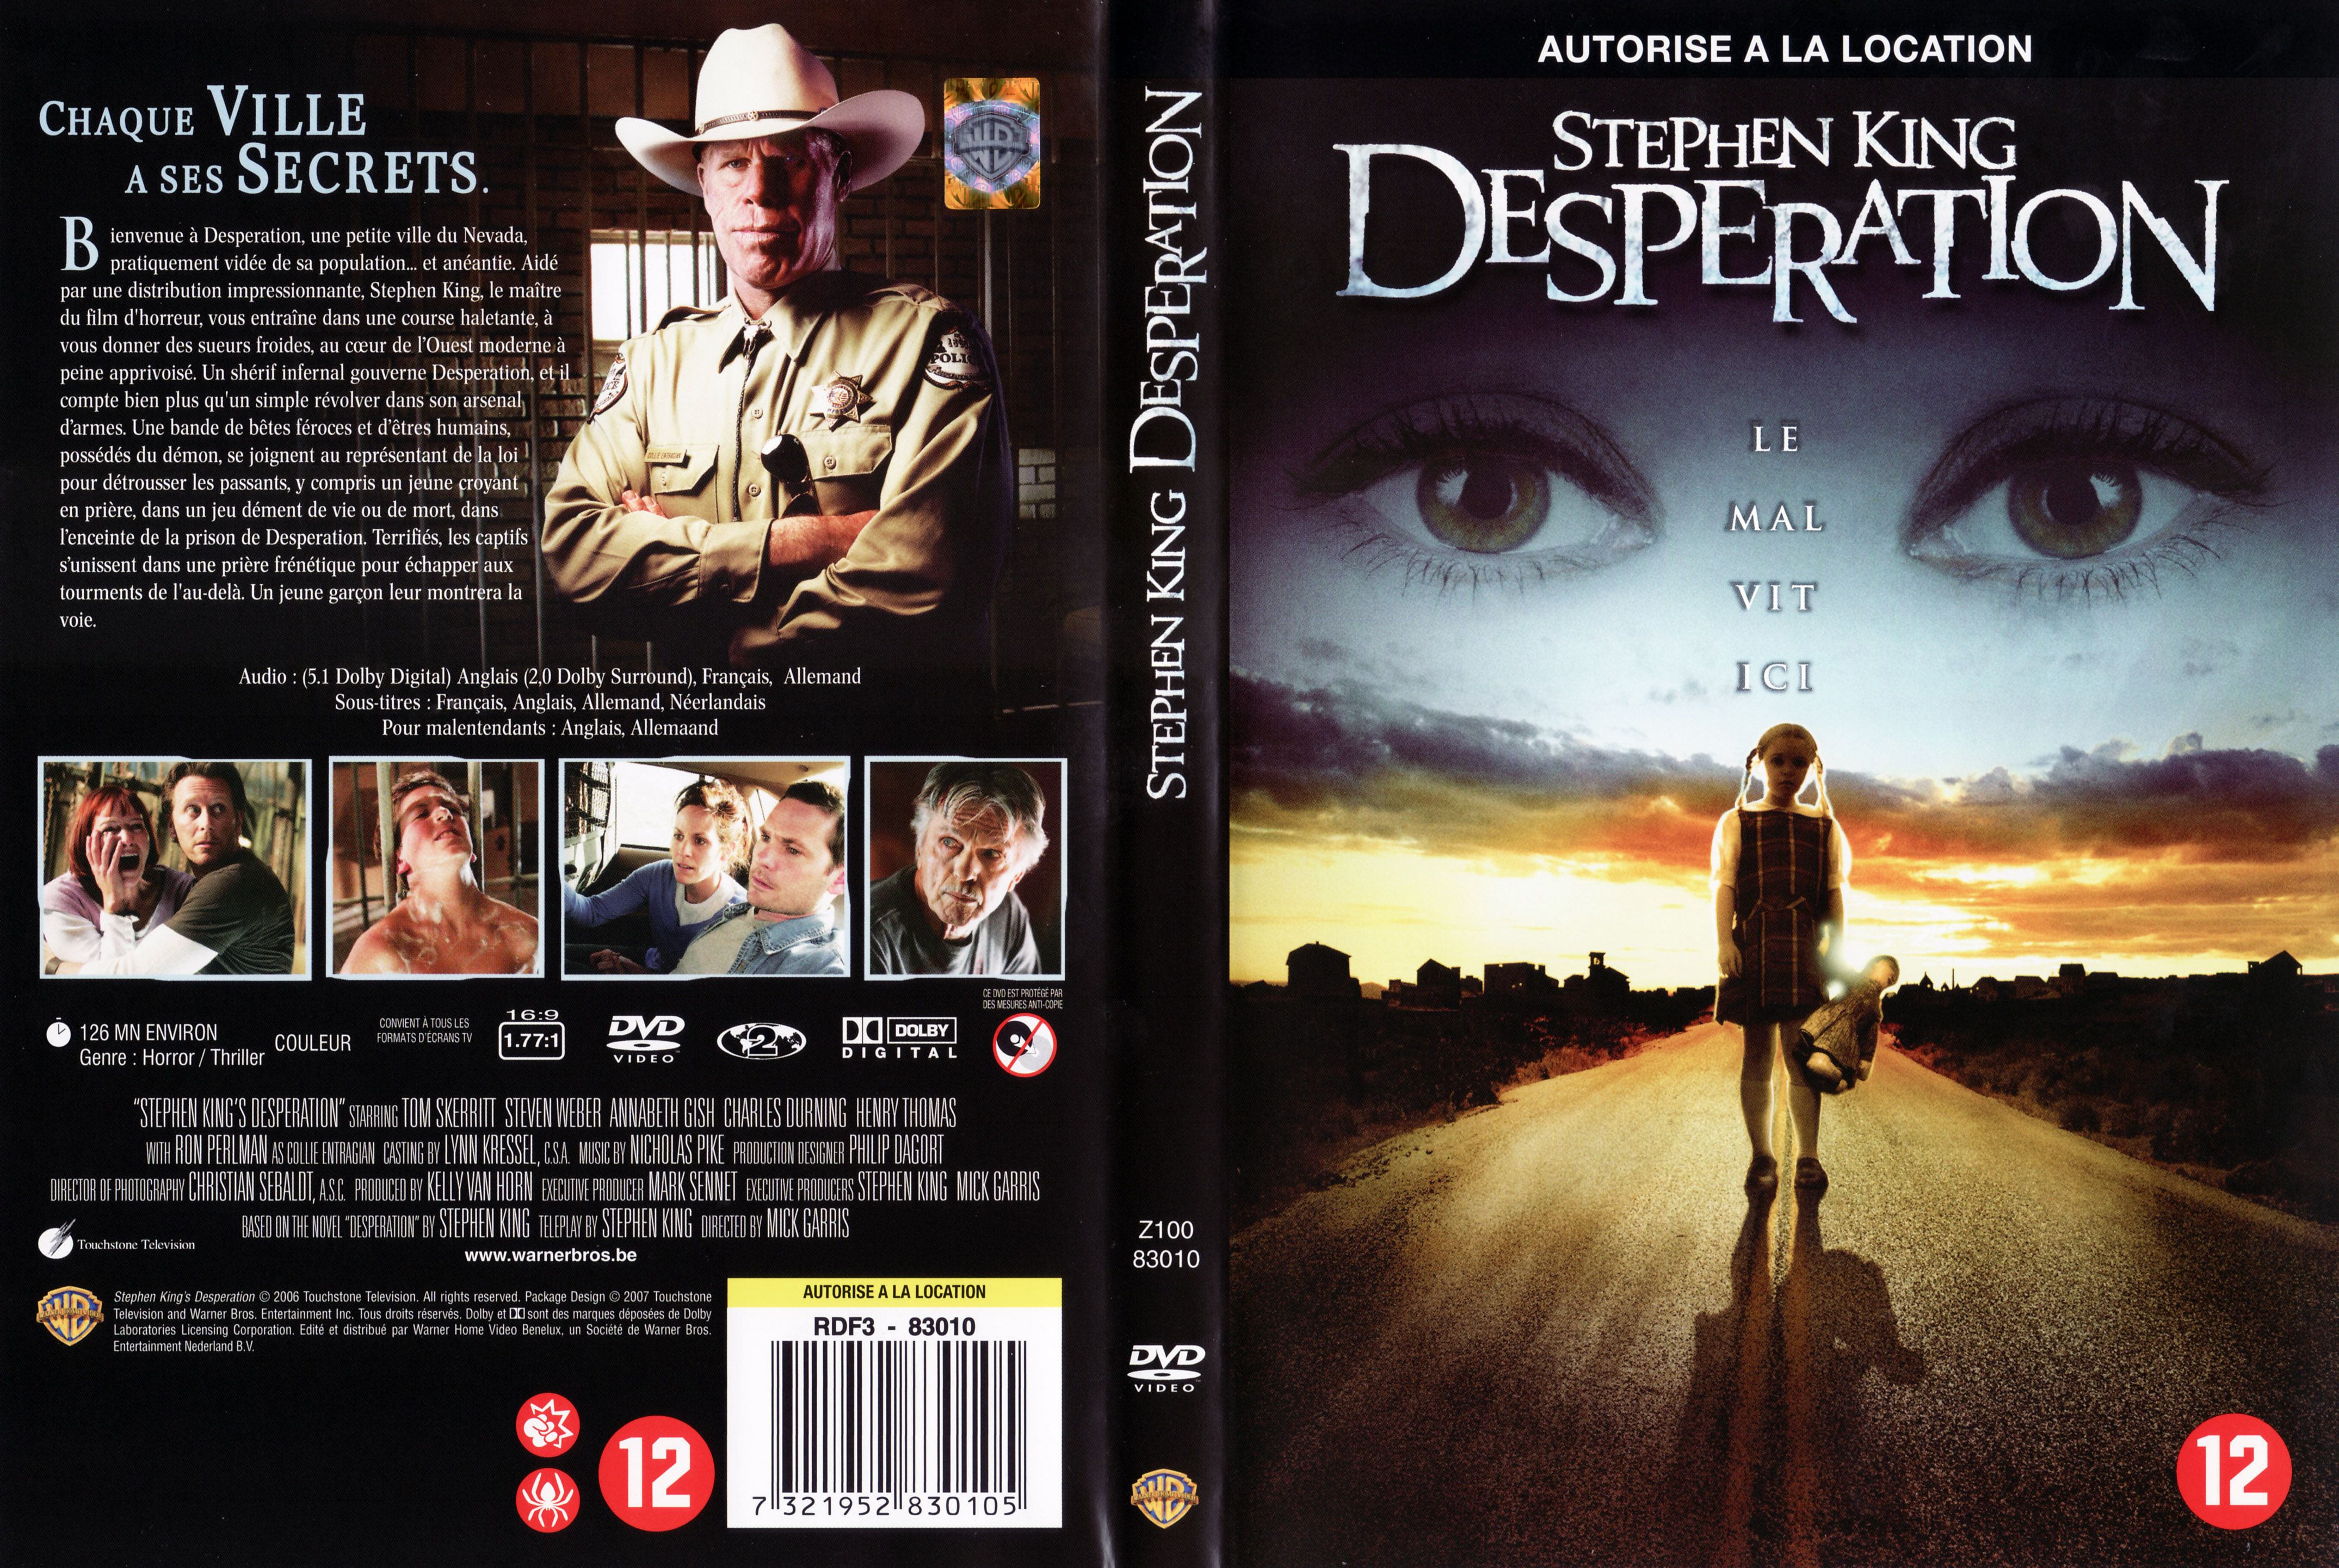 Jaquette DVD Desperation